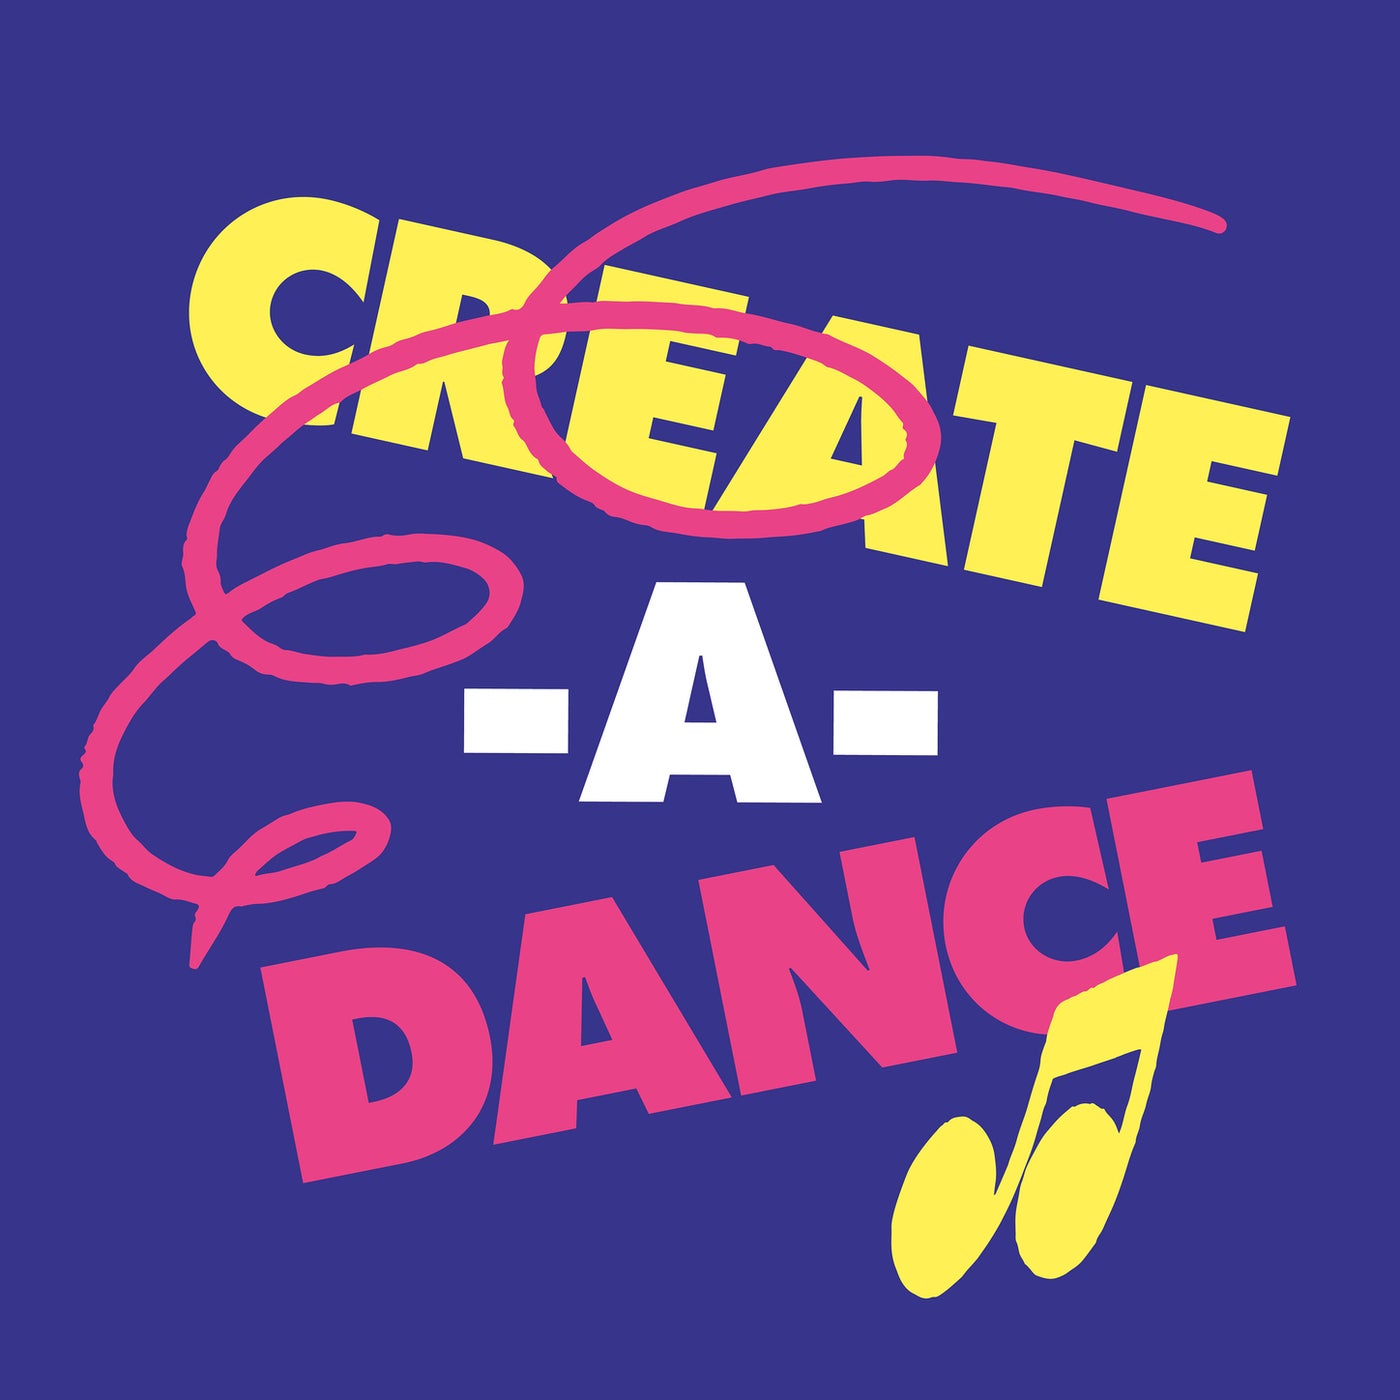 Create-A-Dance